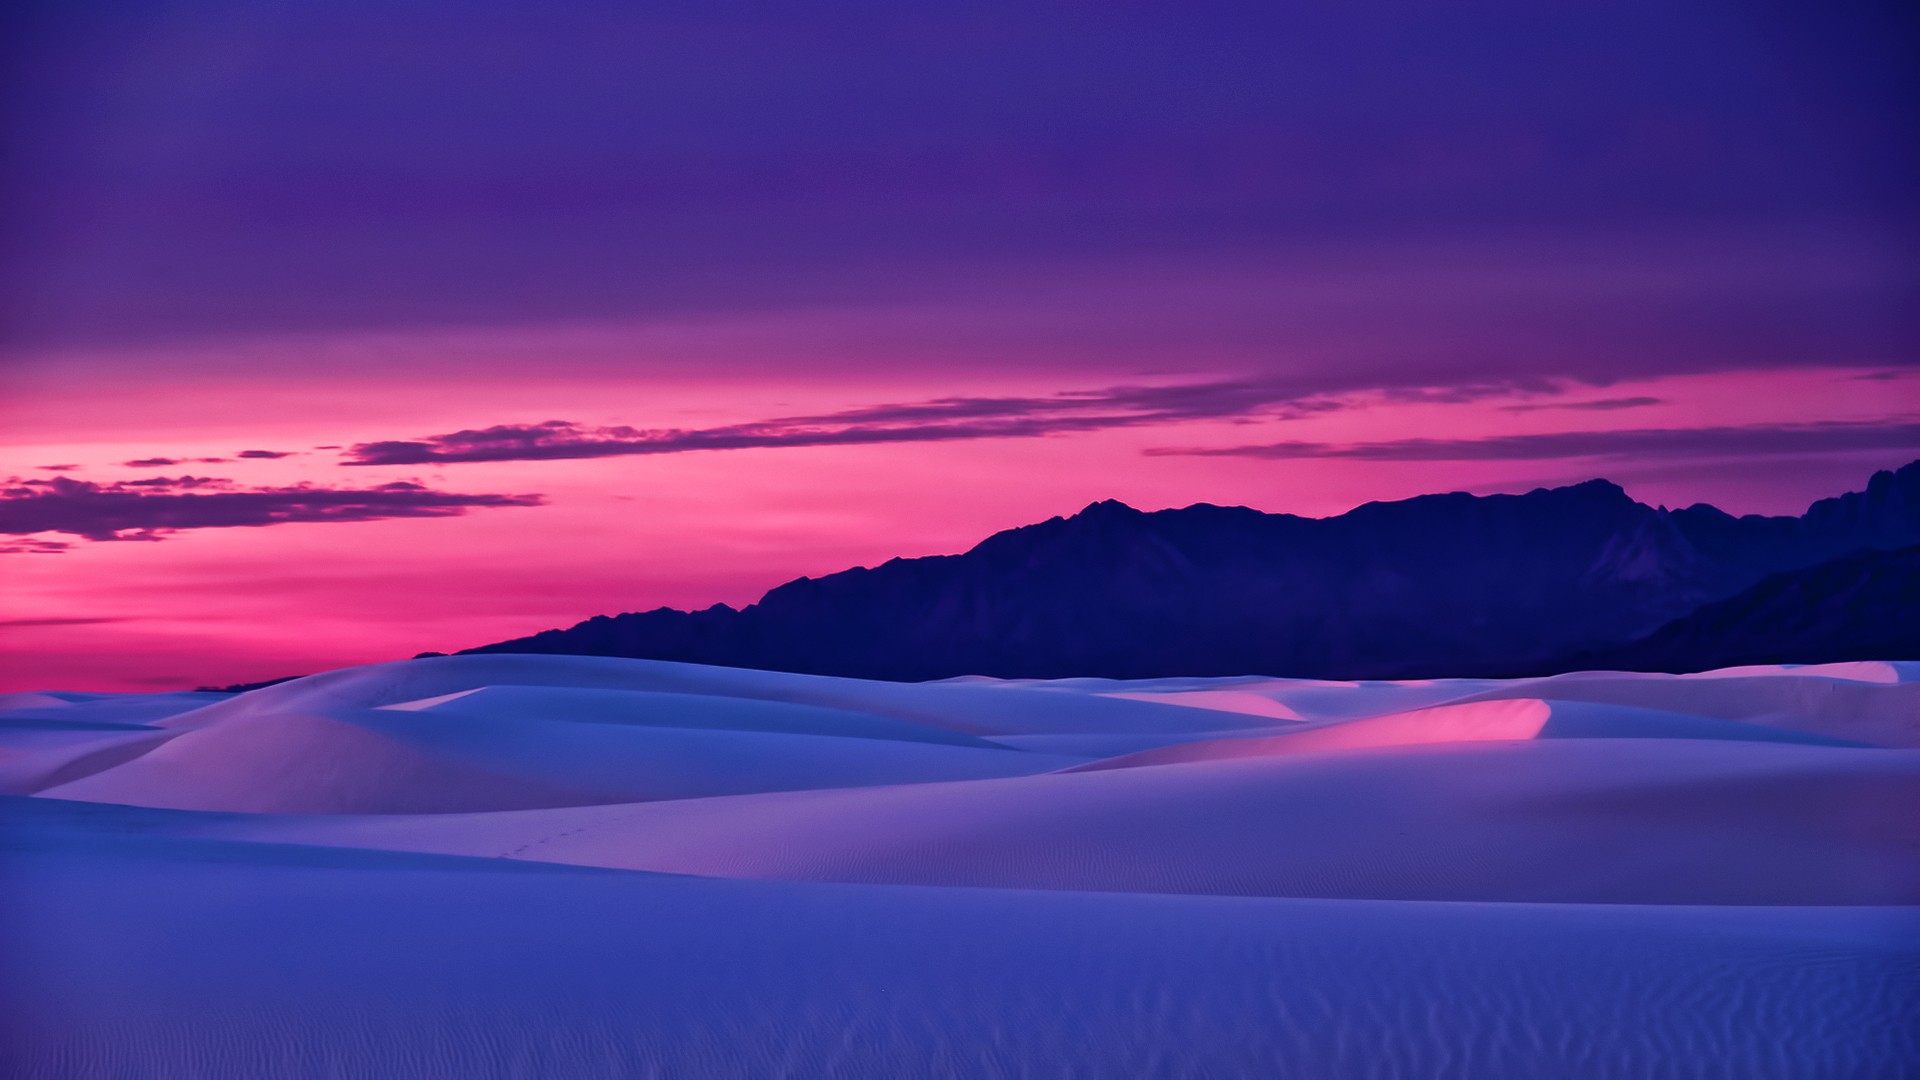 General 1920x1080 sunset mountains sky landscape sand desert pink purple nature